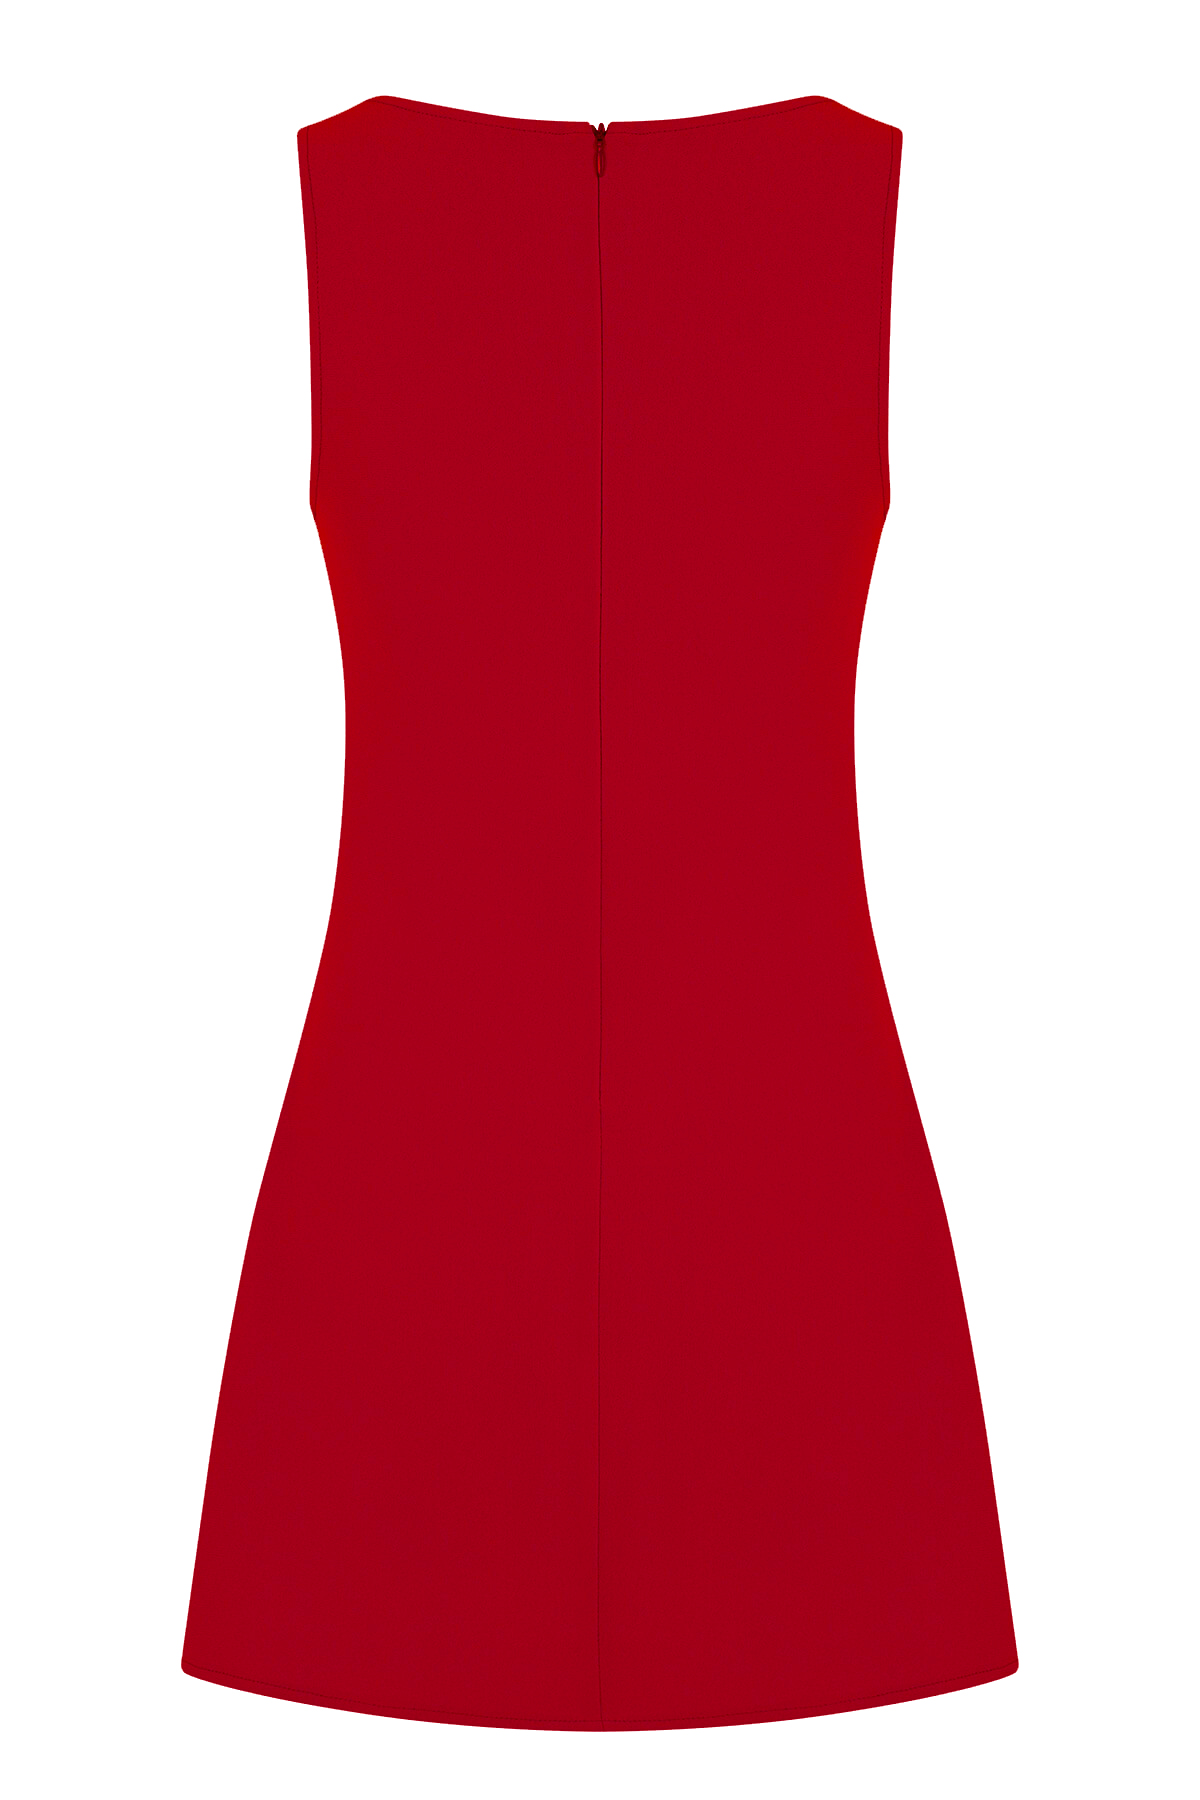 BARBIE Krep Kırmızı Mini Atlet Elbise